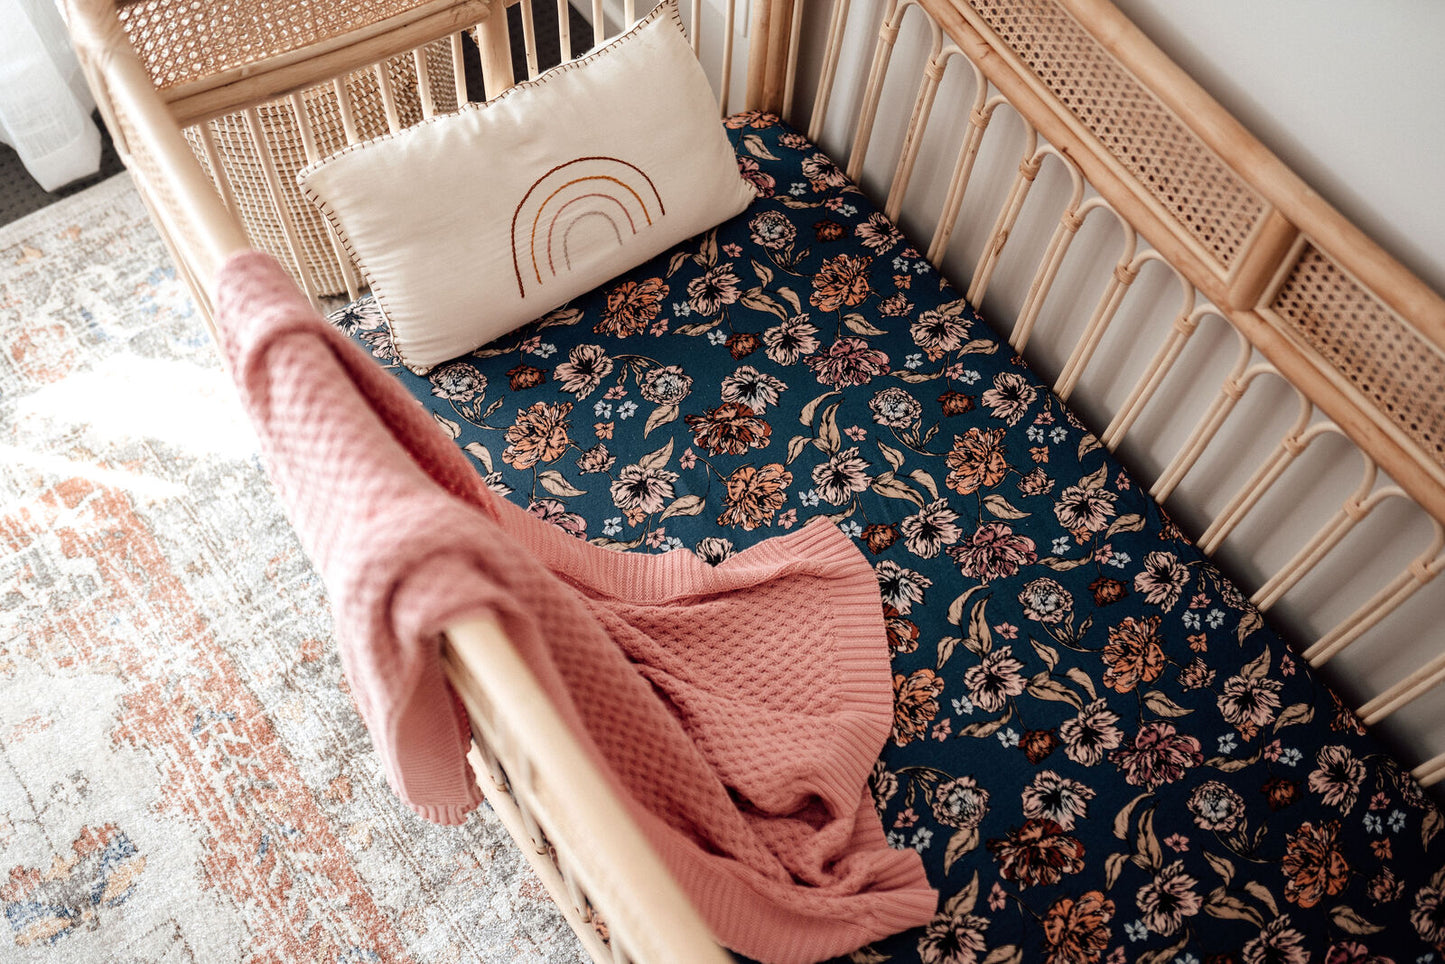 Rosa Knit Baby Blanket